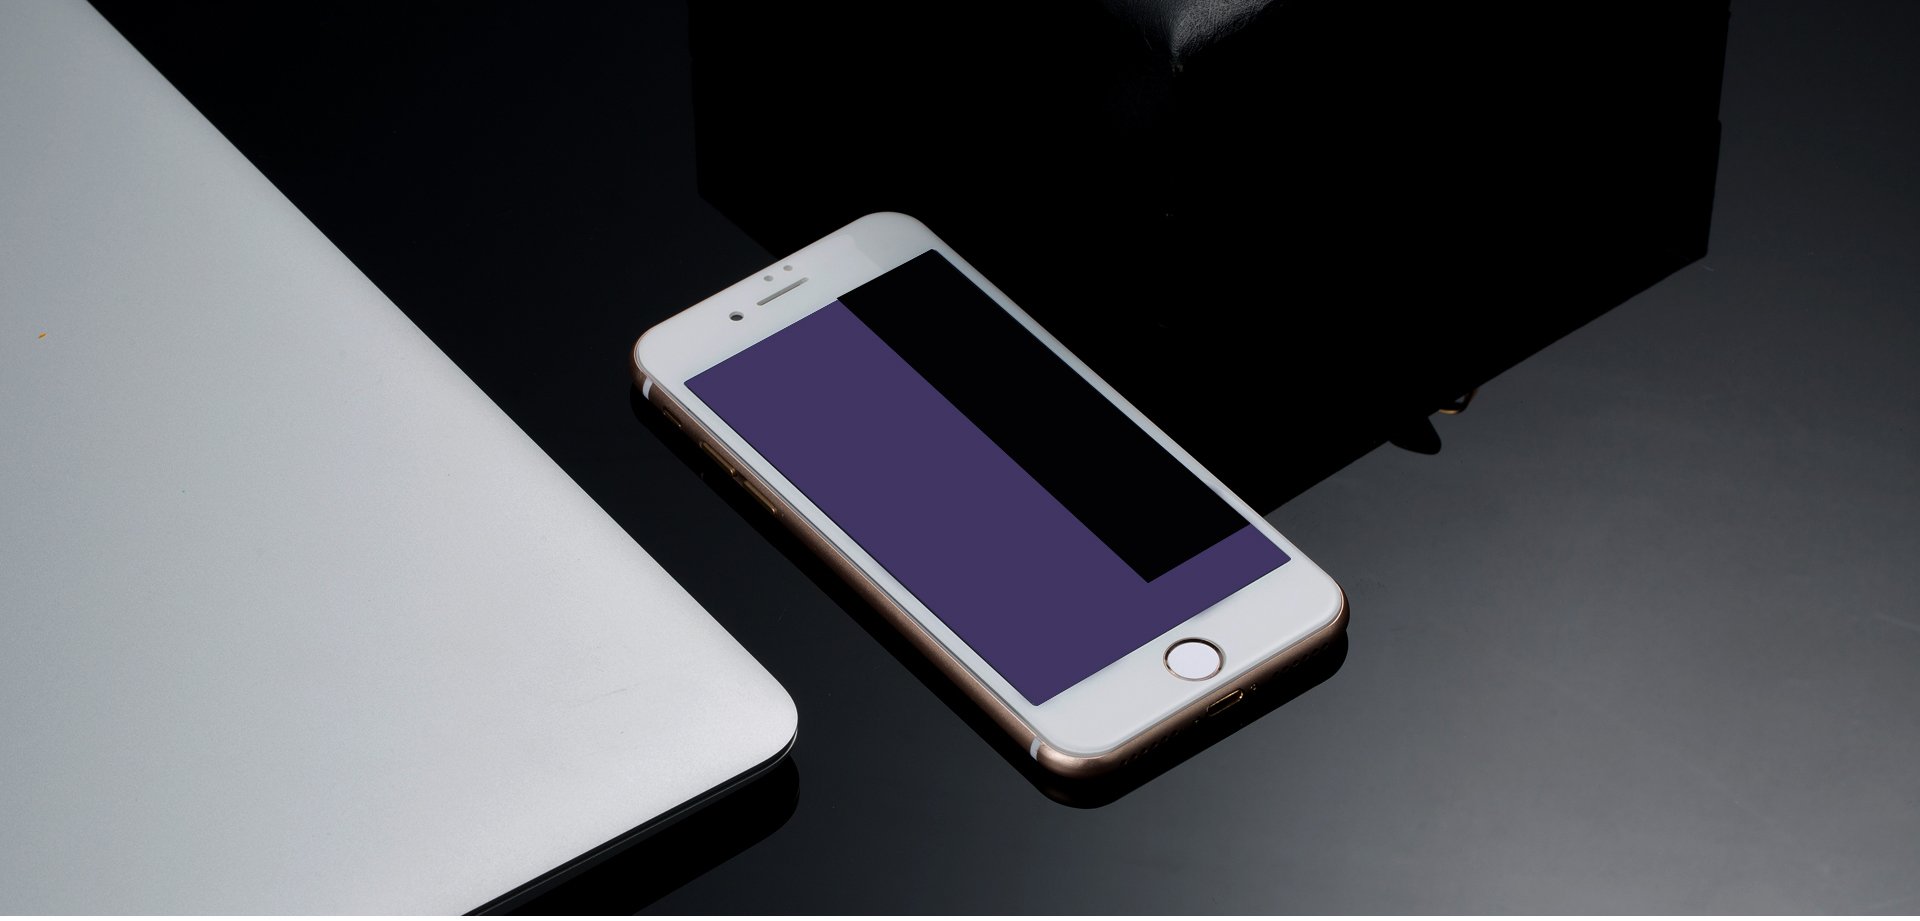 Remax iPhone 6/6S 3D kijelzővédő üvegfólia fehér